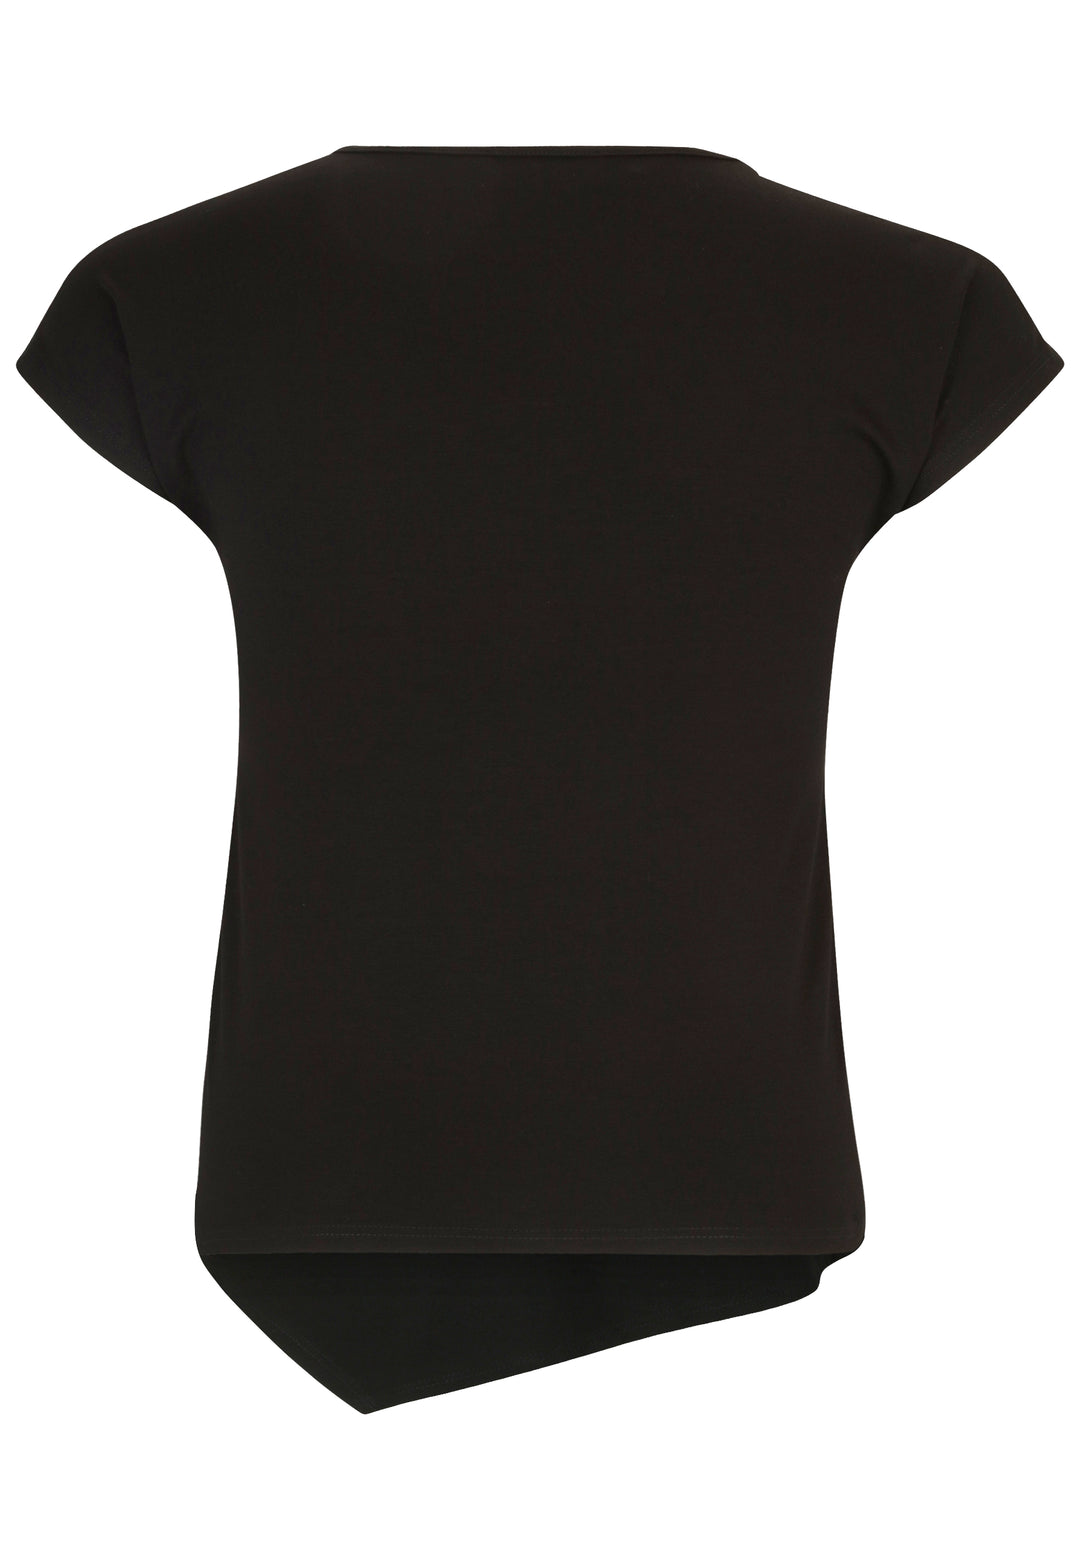 zwart t-shirt met tekening-doris streich-537270-78